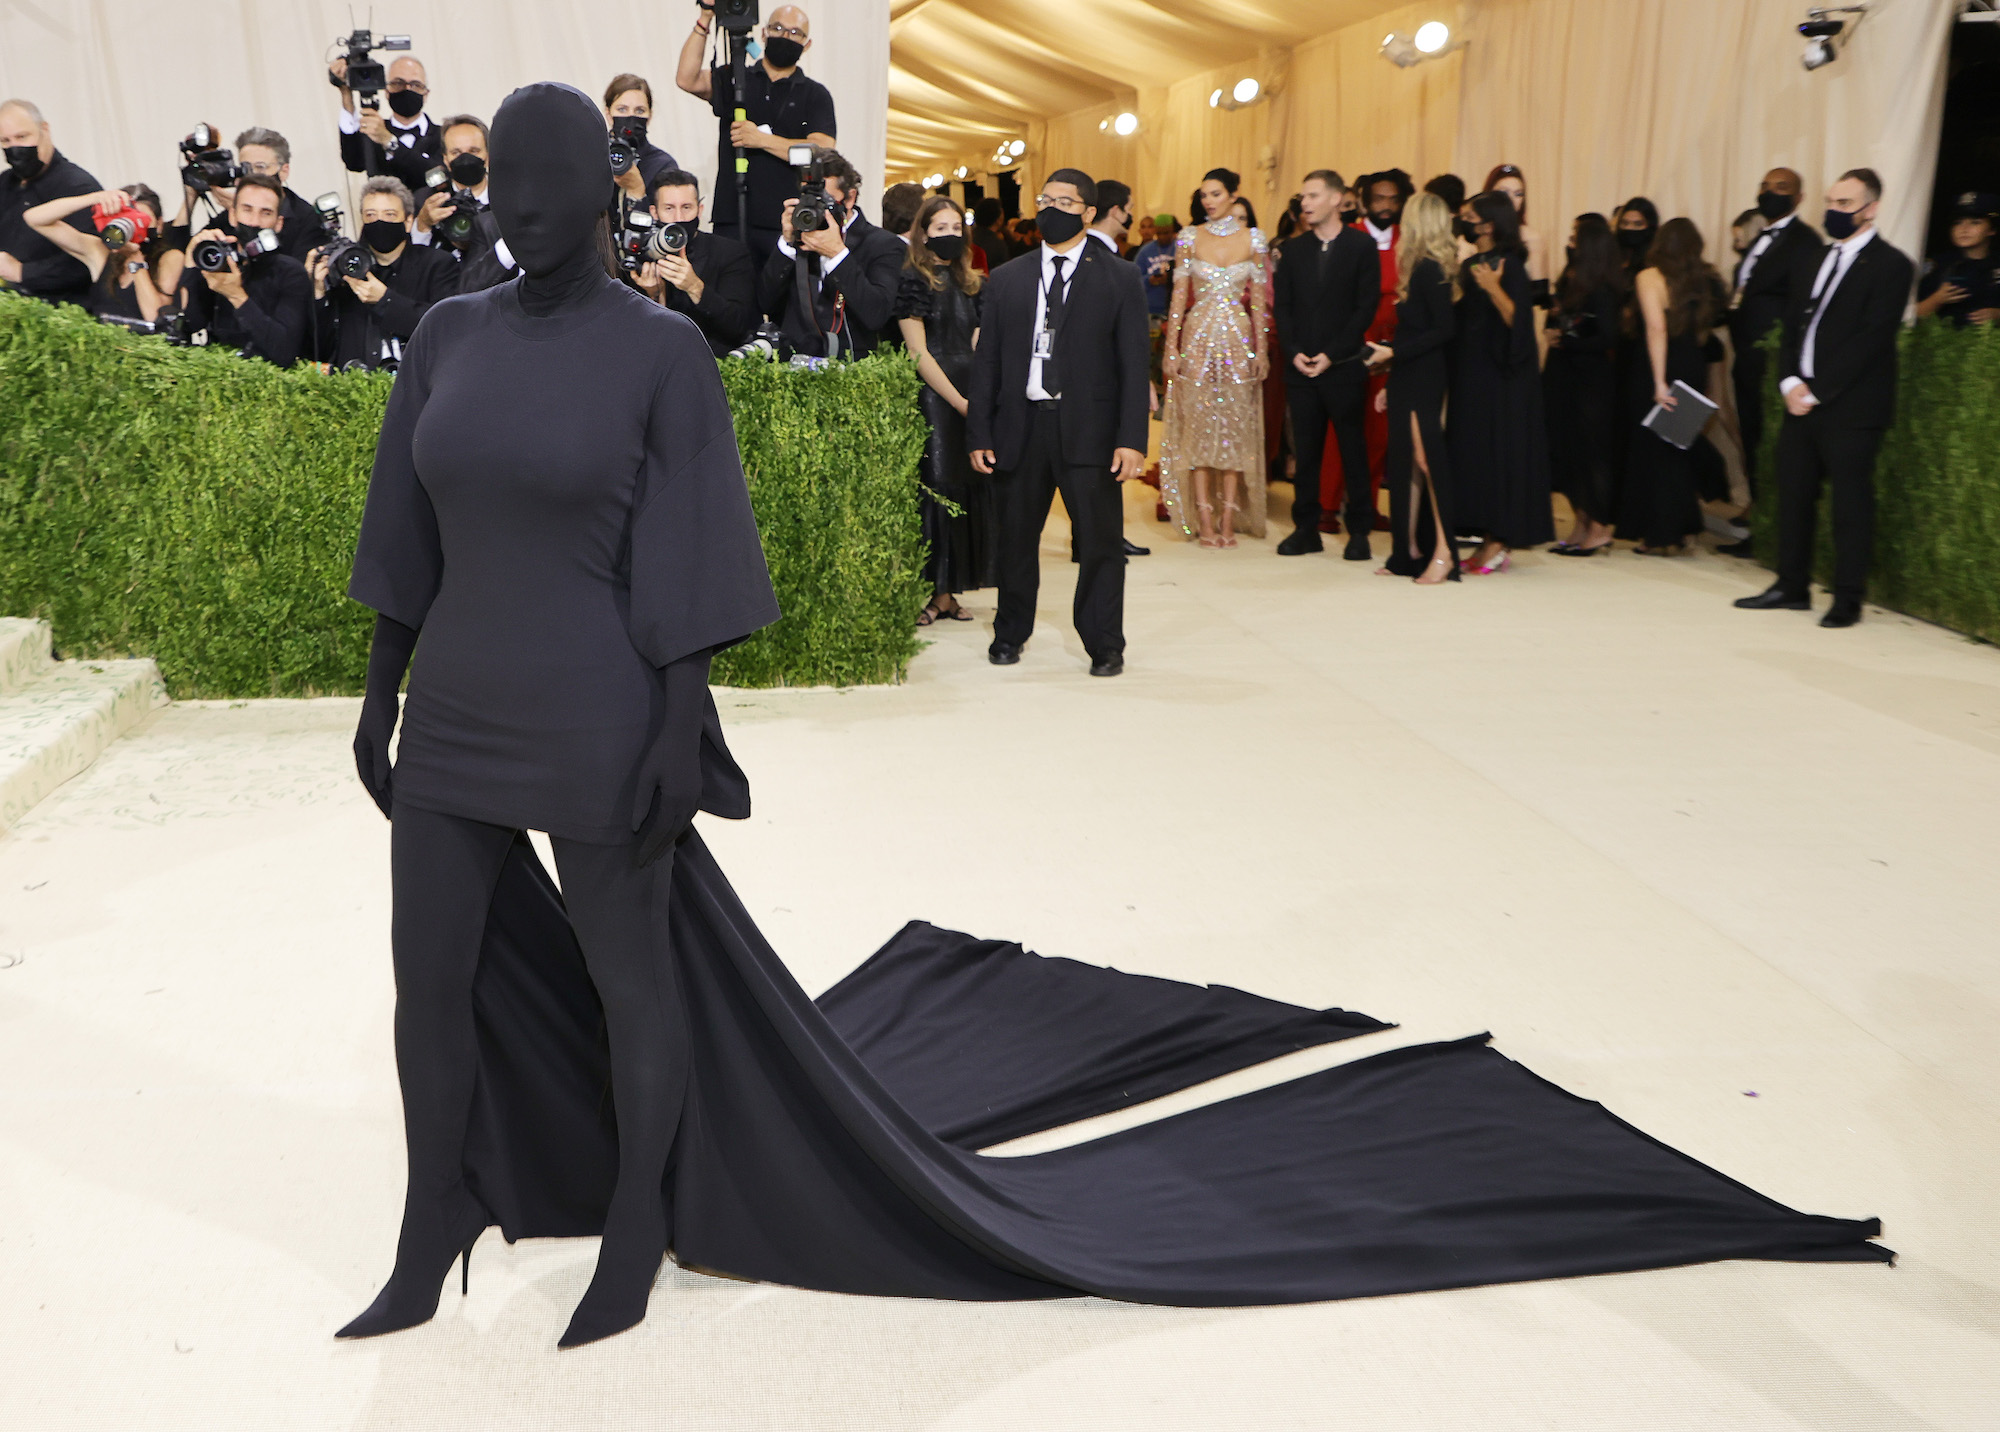 Kim Kardashian West attending the 2021 Met Gala wearing an all-black custom Balenciaga outfit